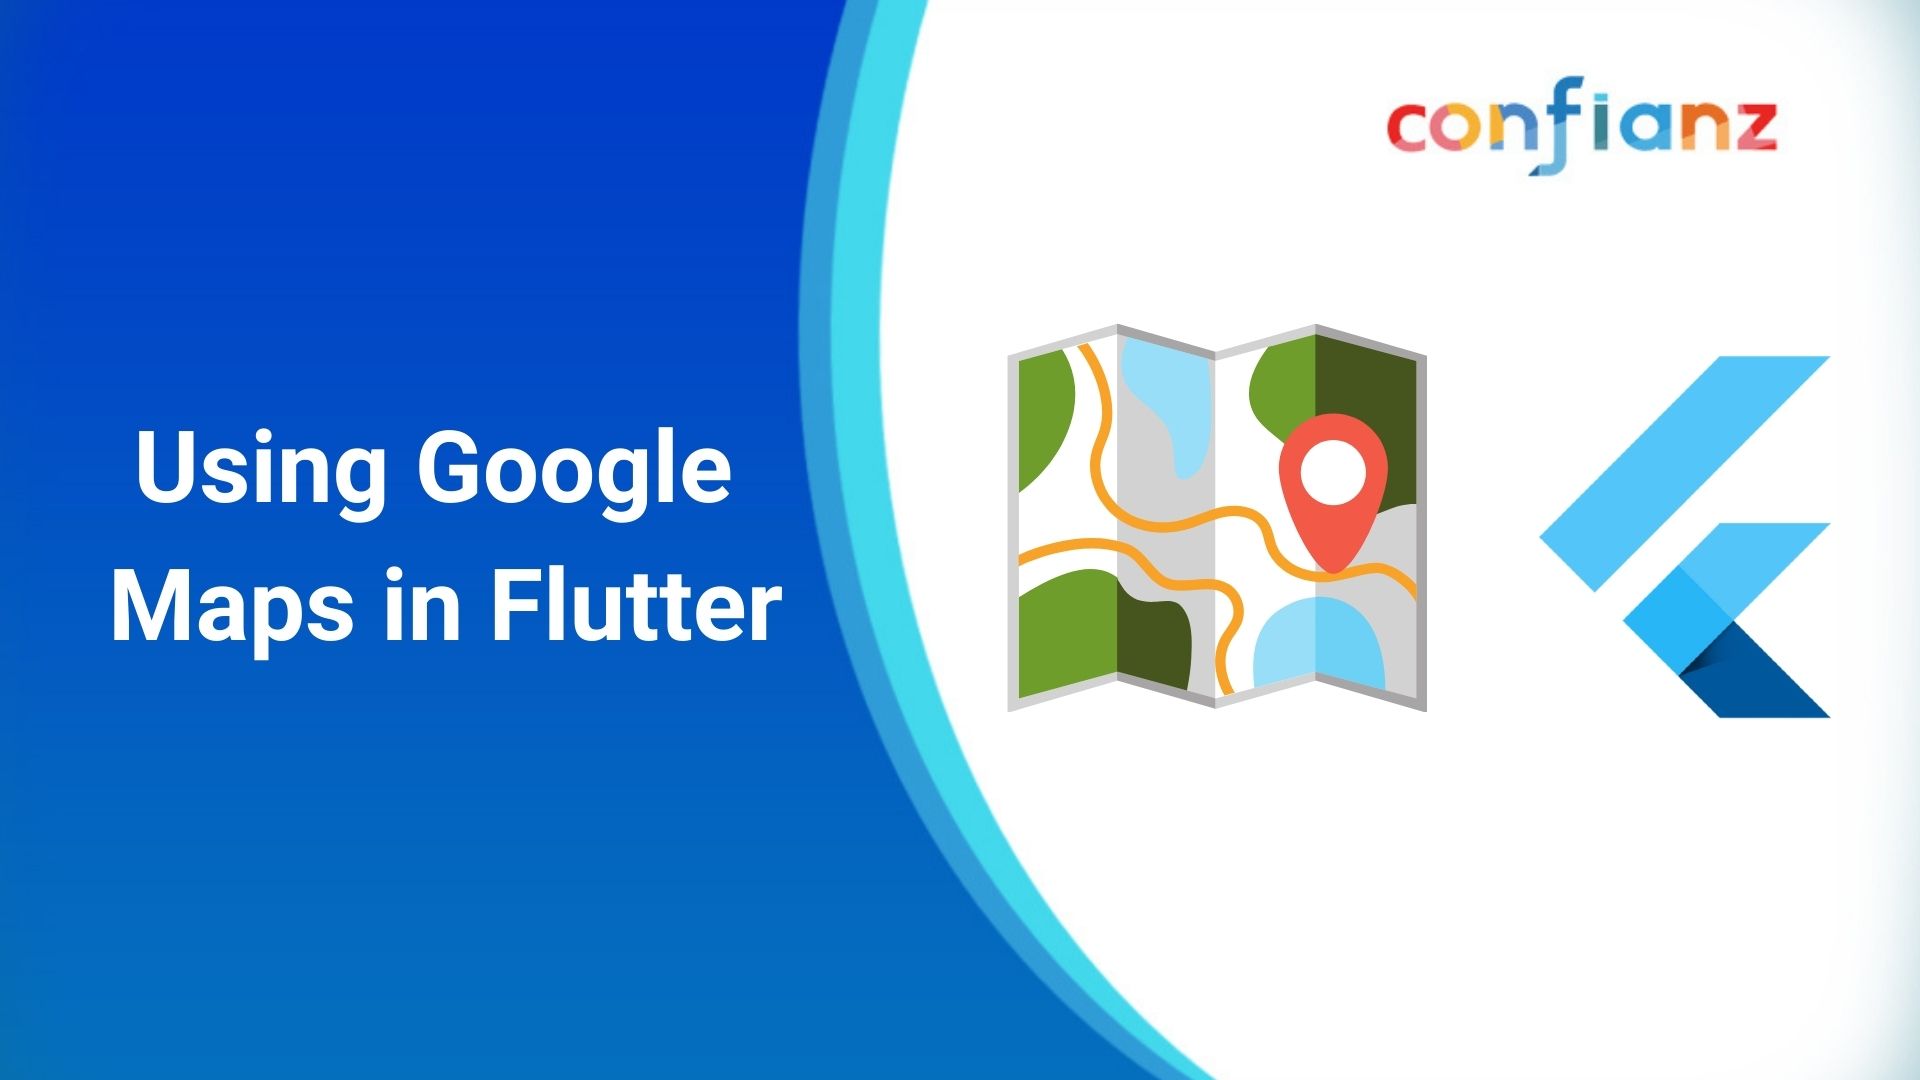 google flutter team based in seattle